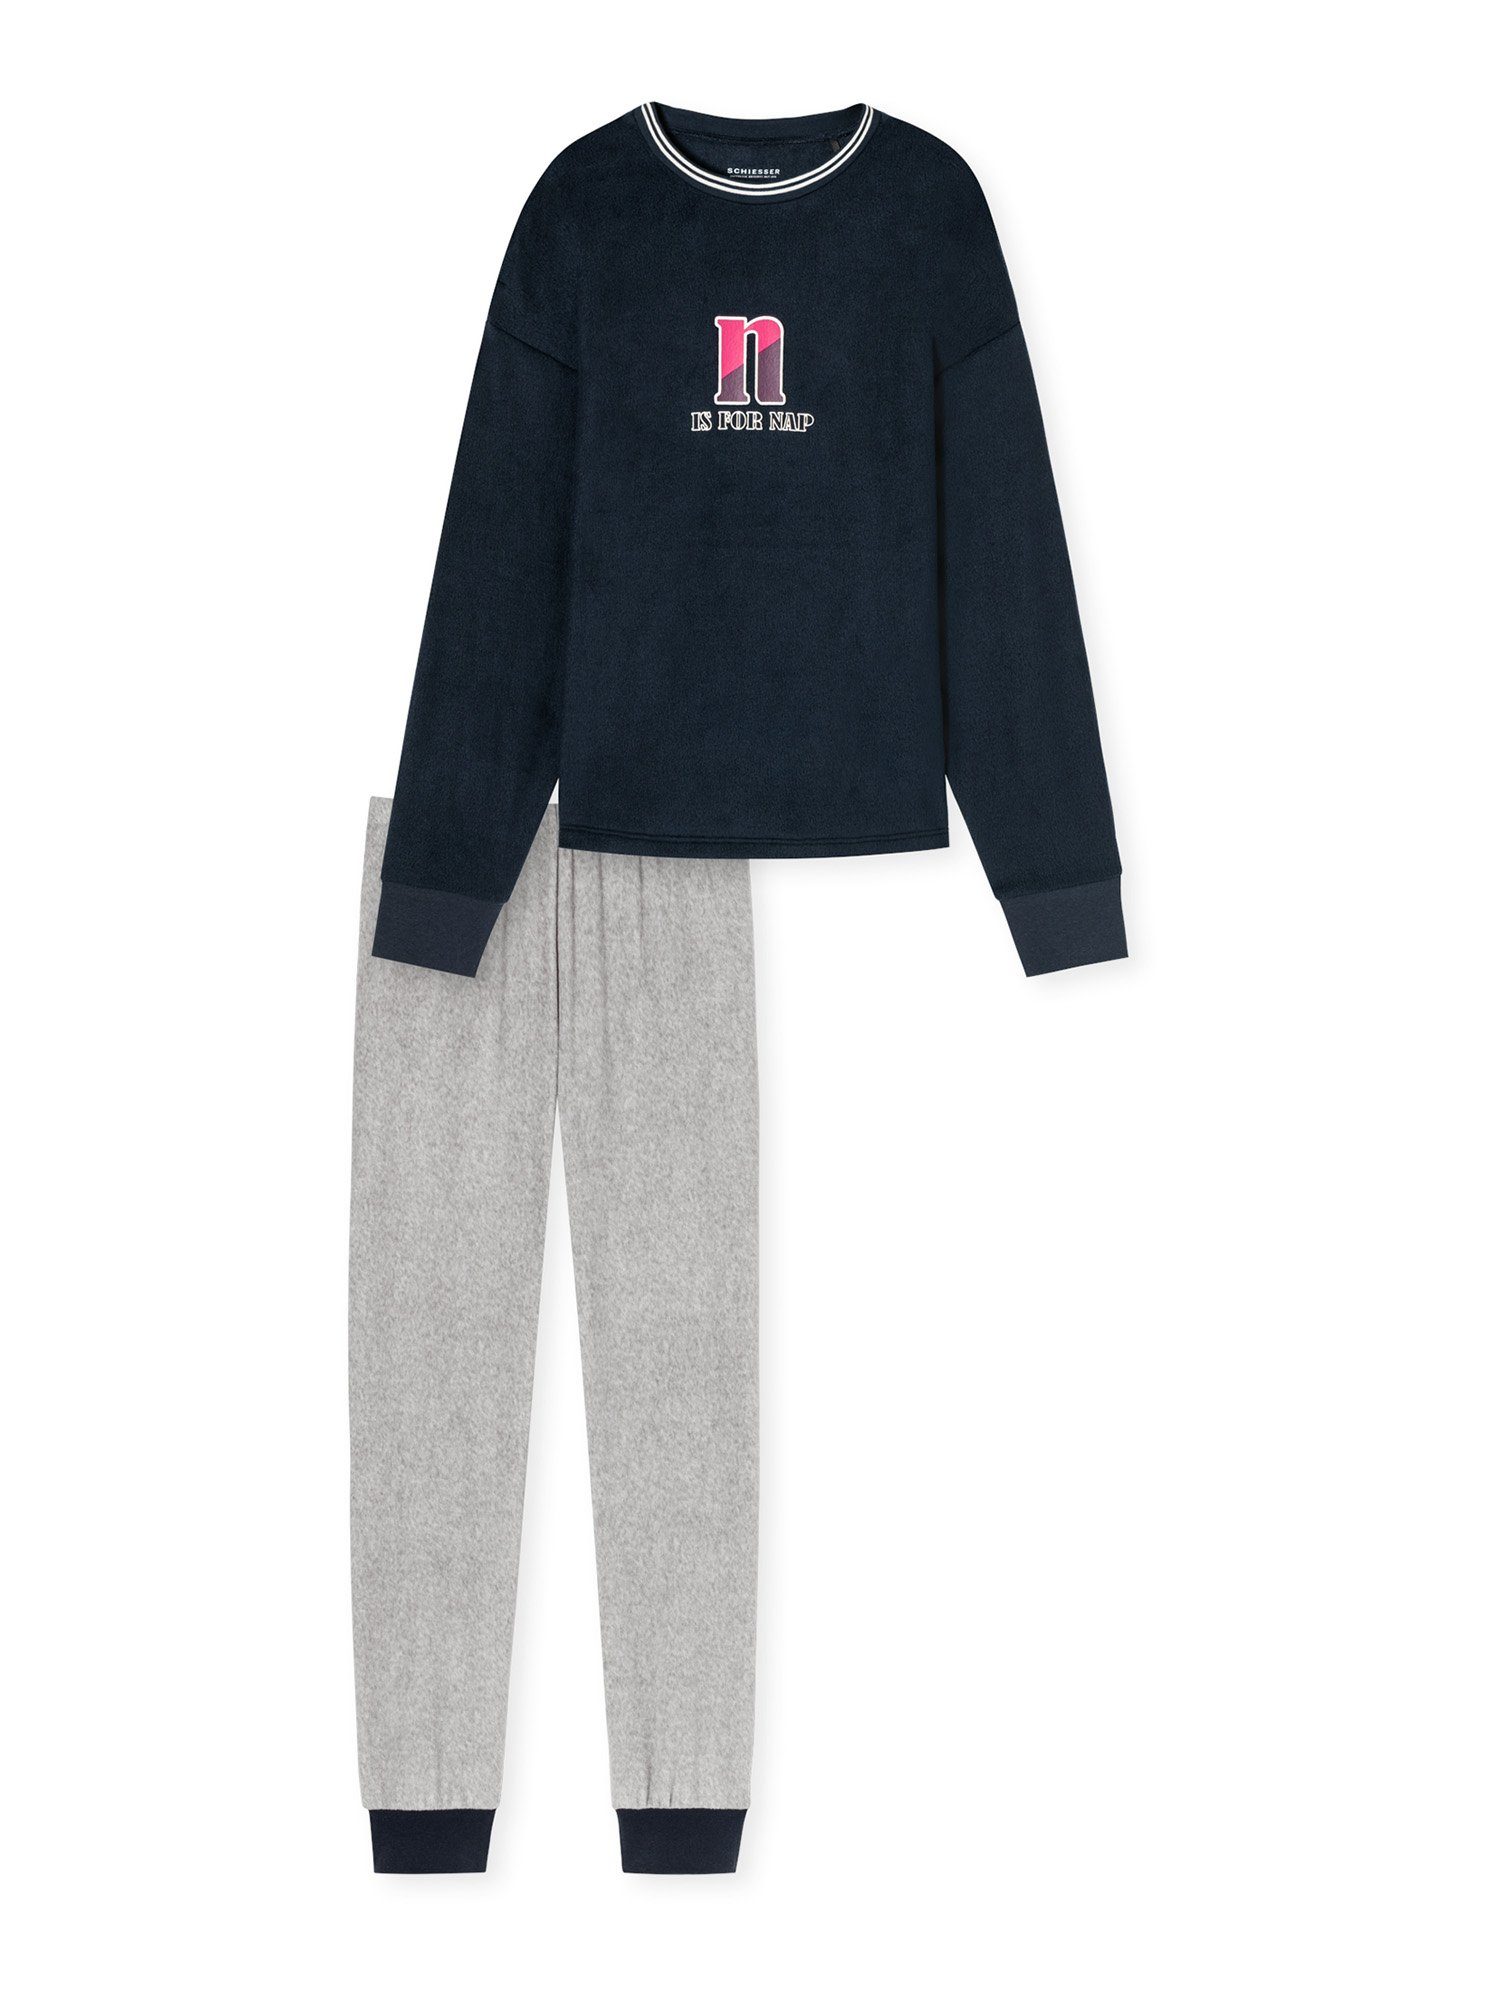 Pyjama Teens pyjama Nightwear schlafanzug Schiesser schlafmode